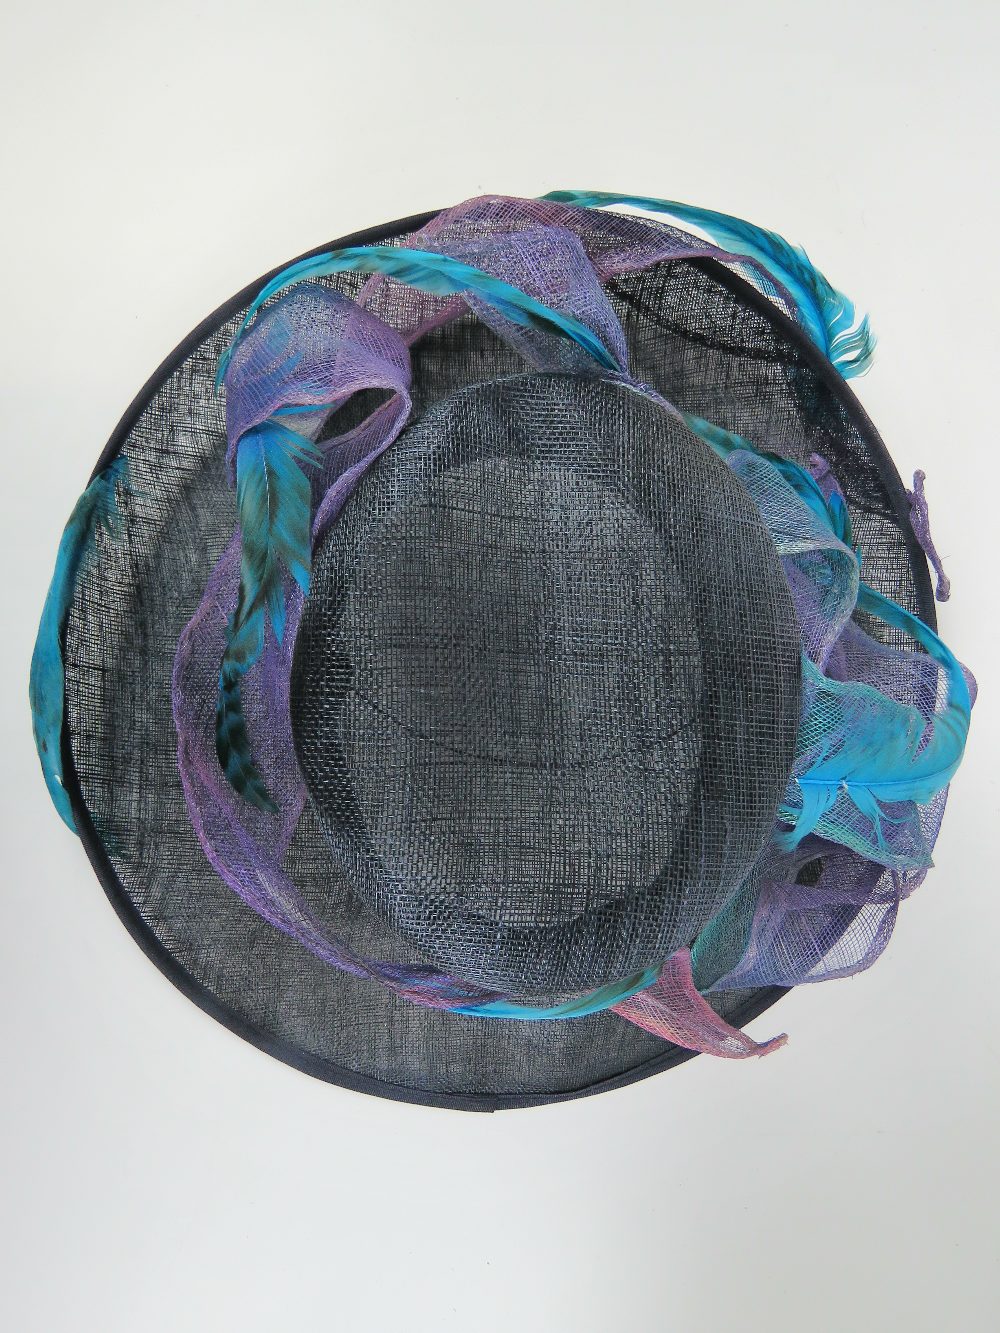 Ladies hat by Helene De Reboul in purples and blues, in box. - Image 5 of 6